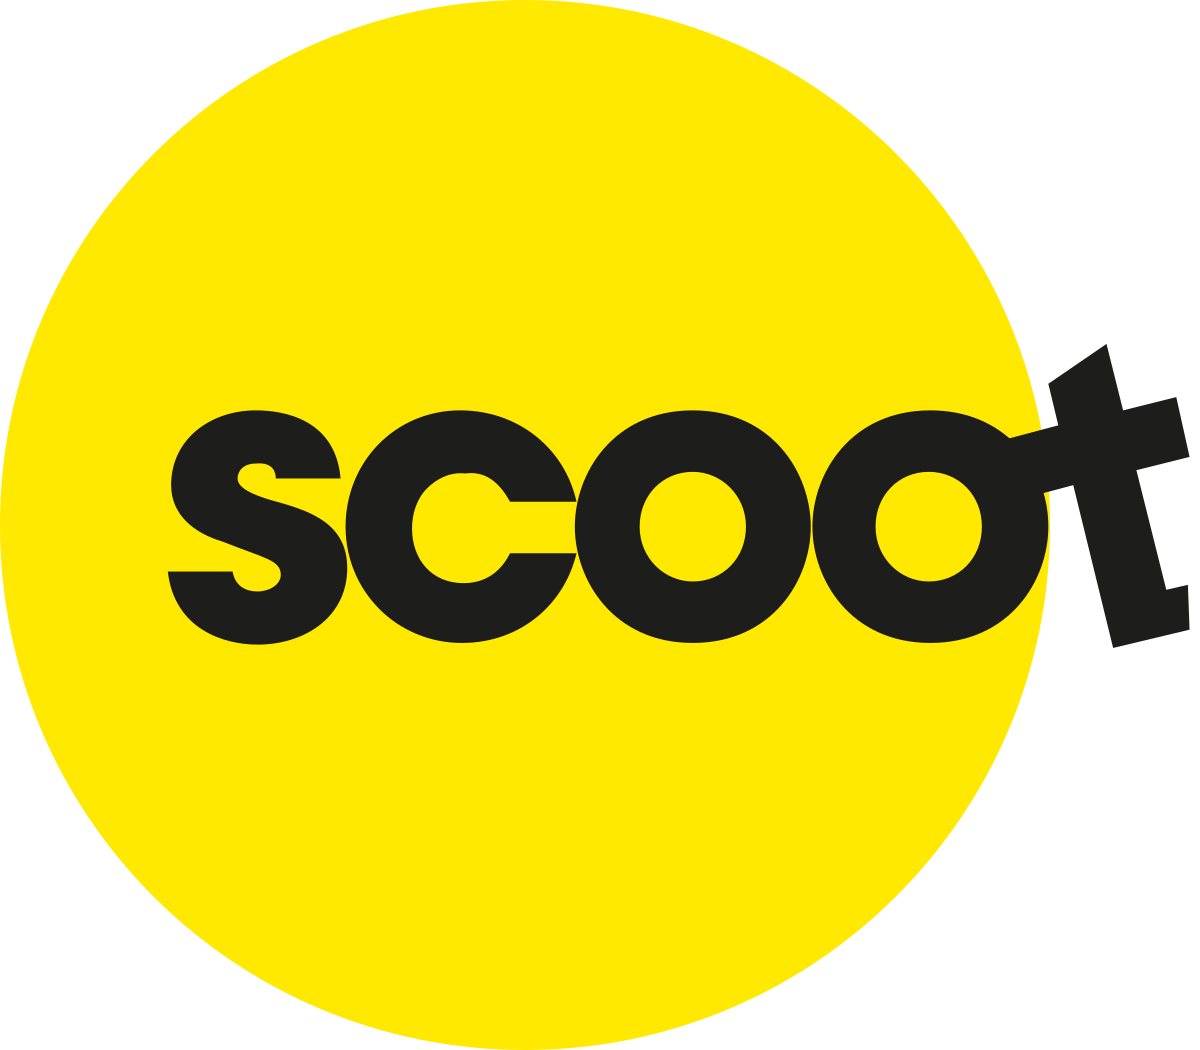 SCOOT/